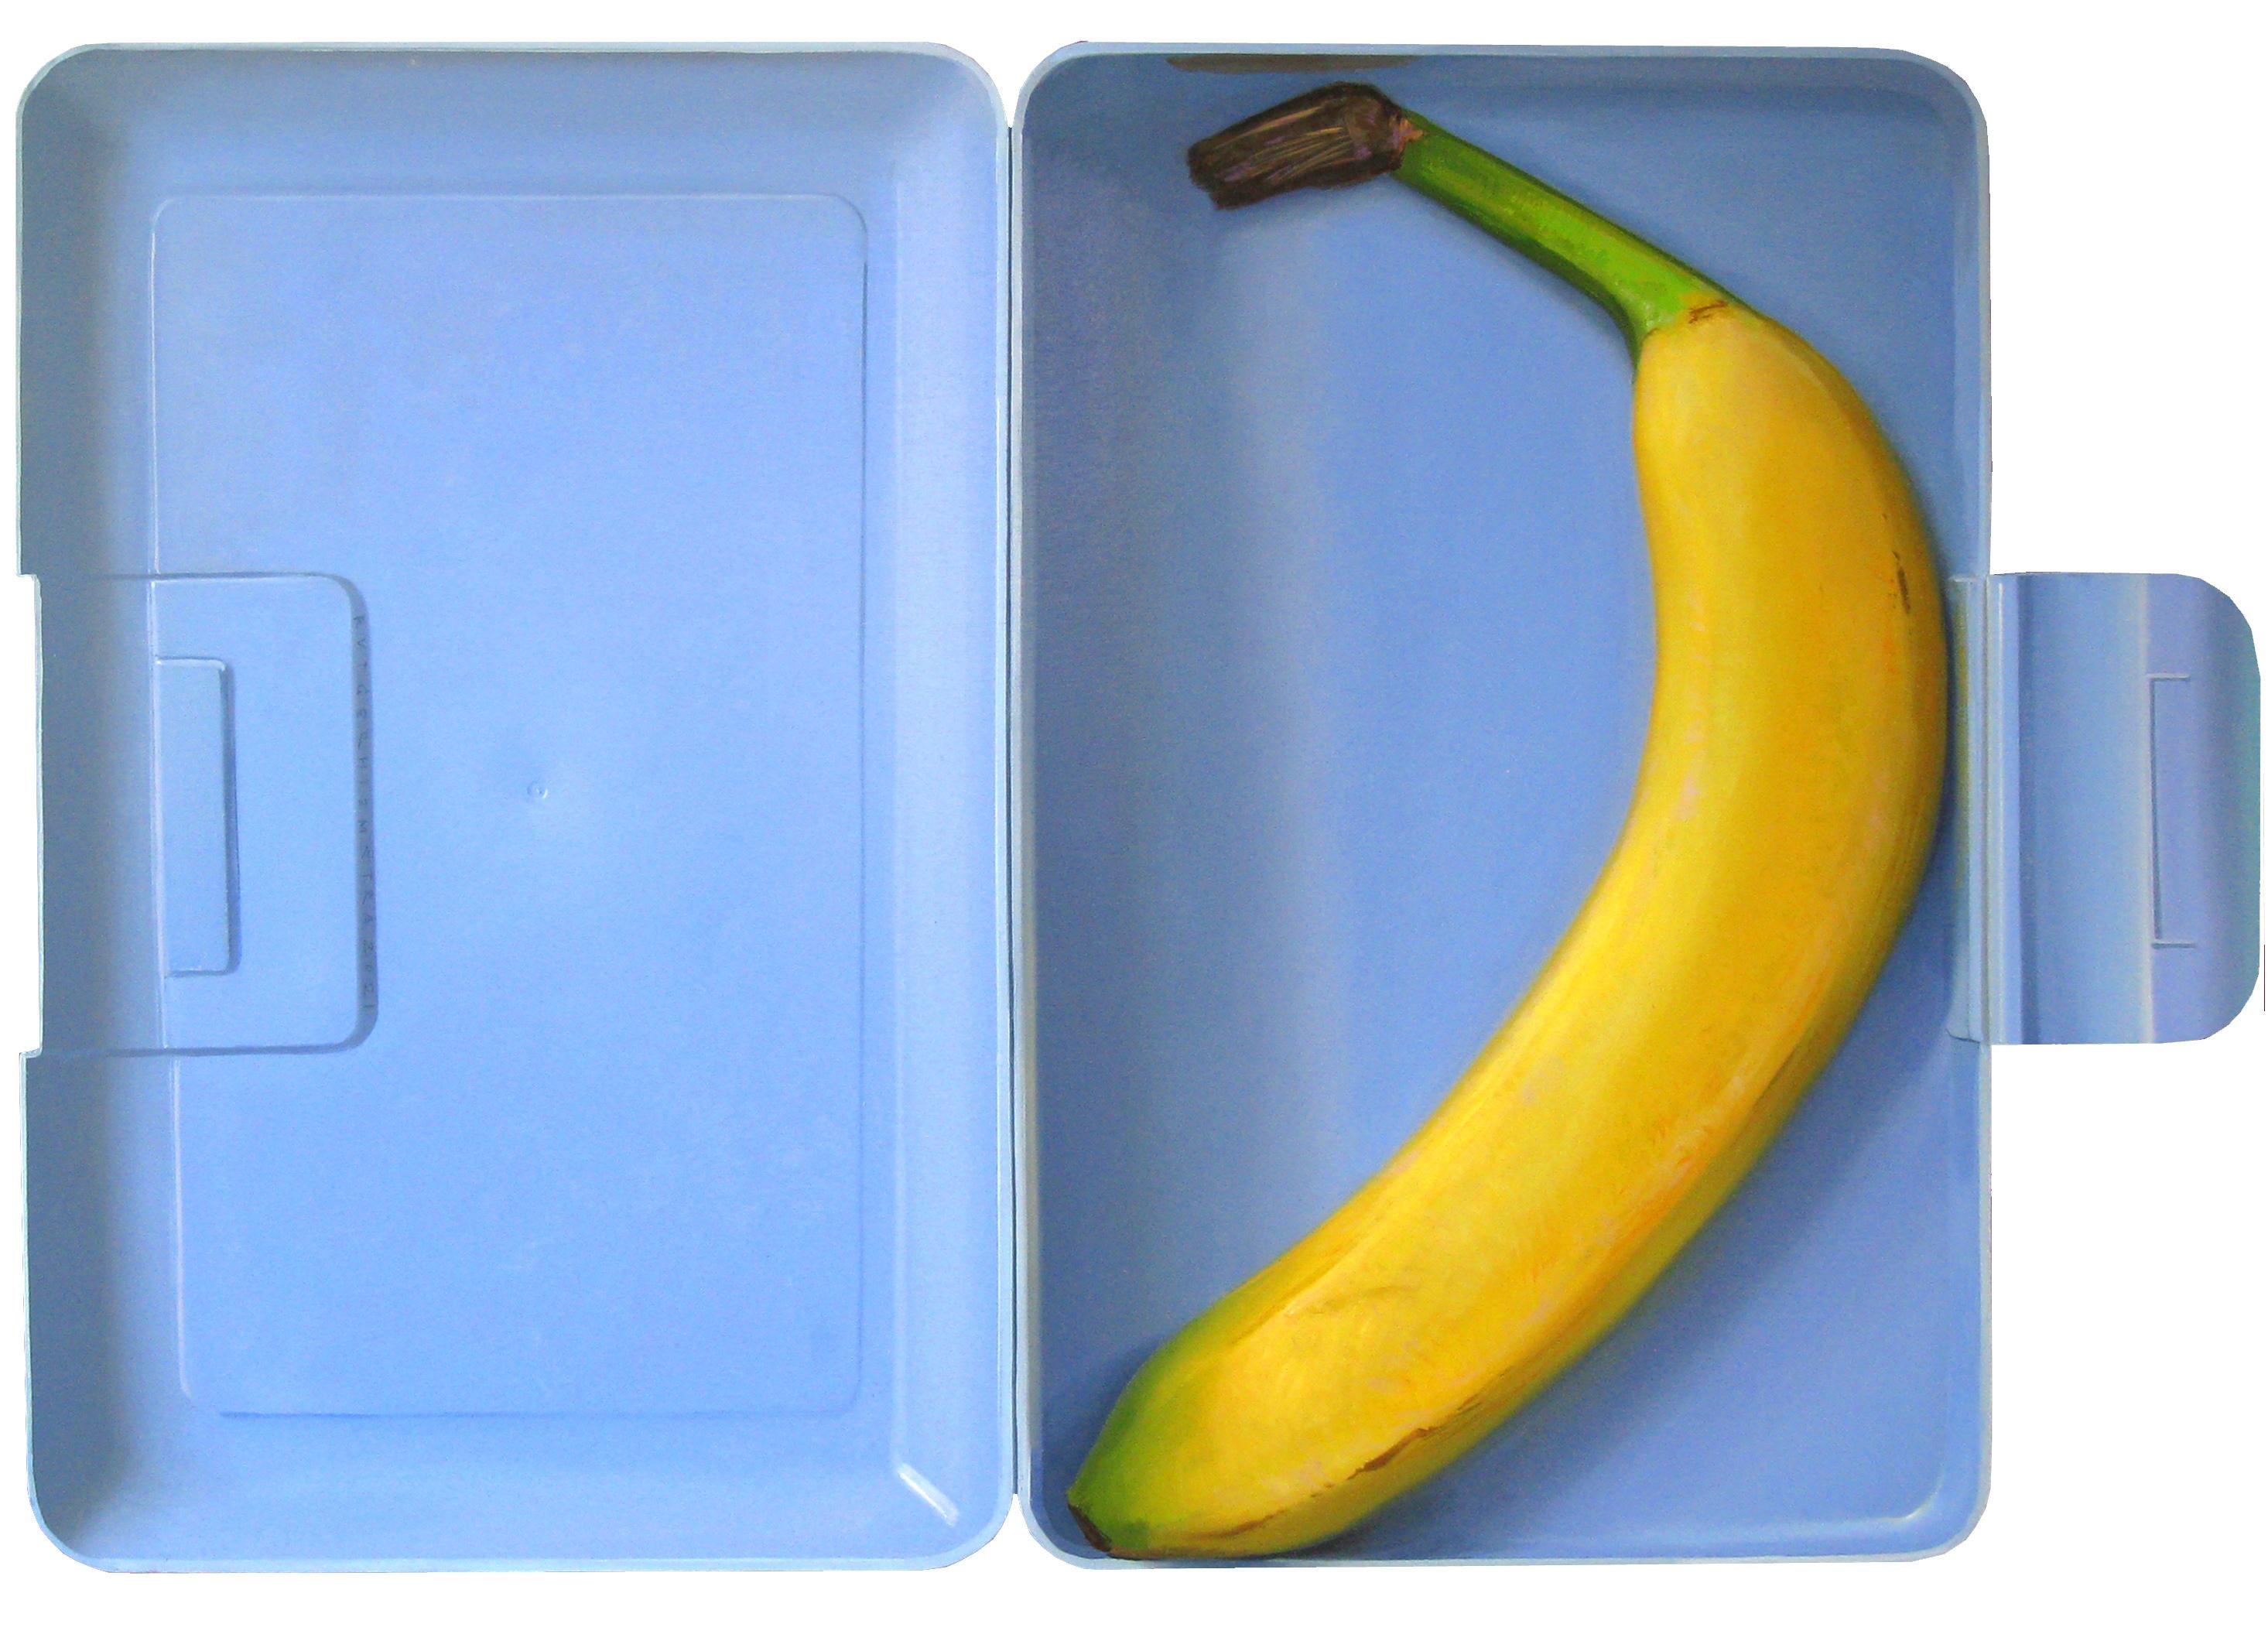 Rutger Hiemstra Still-Life Painting - Banana in lunchbox- 21st Century Contemporary Still-life Painting of a banana